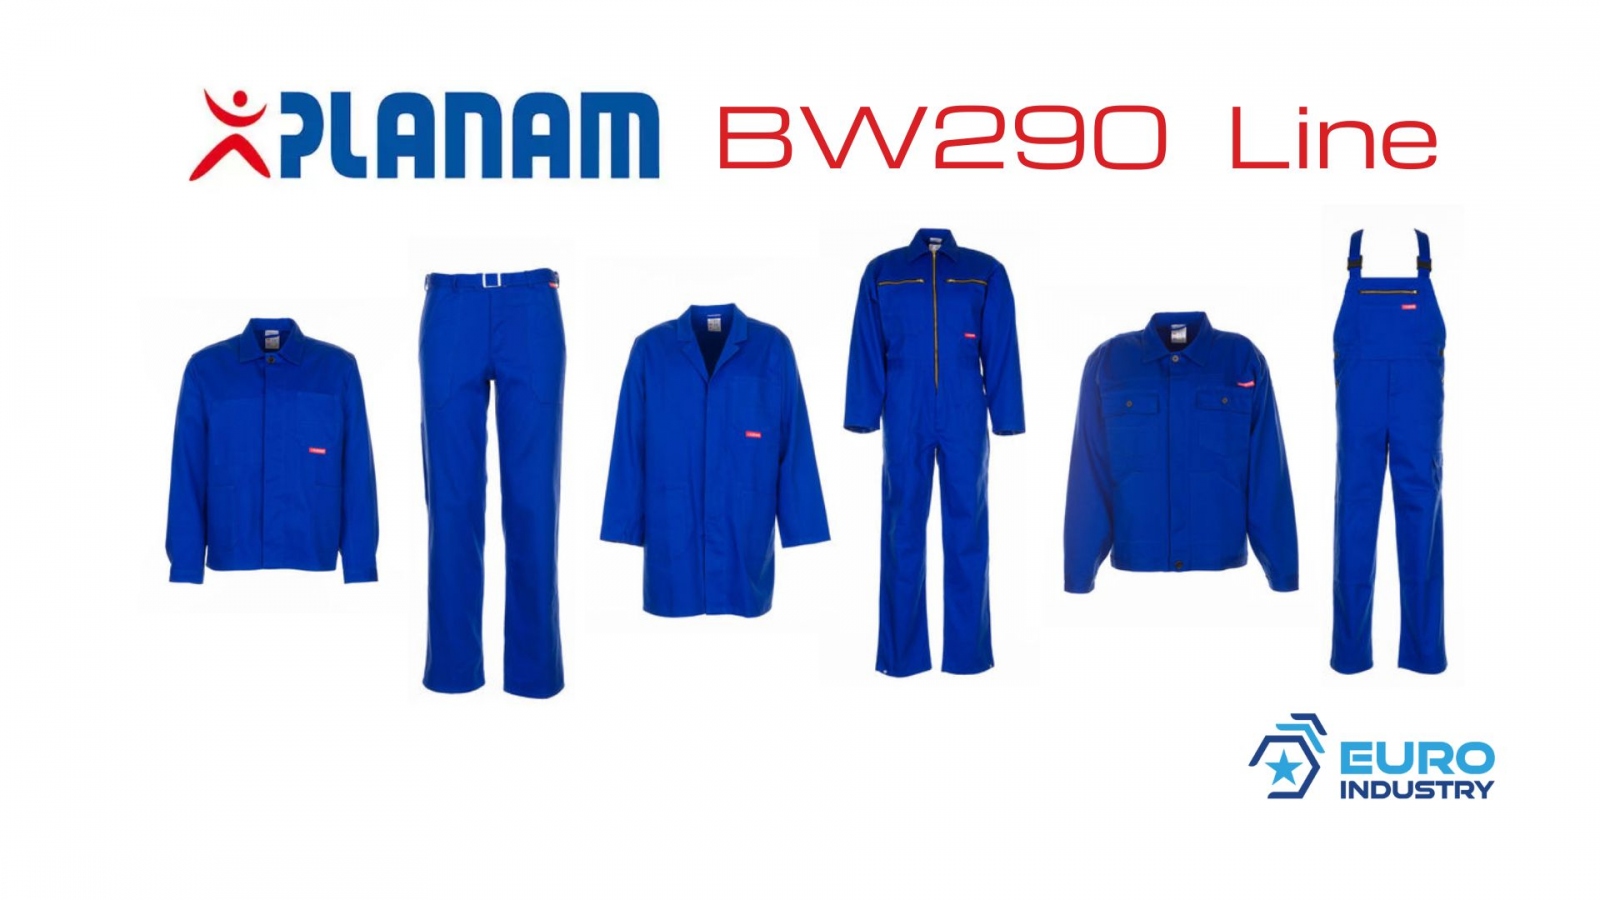 pics/Planam/0116/planam-bw-290-linie-kornblau-baumwolle-details.jpg